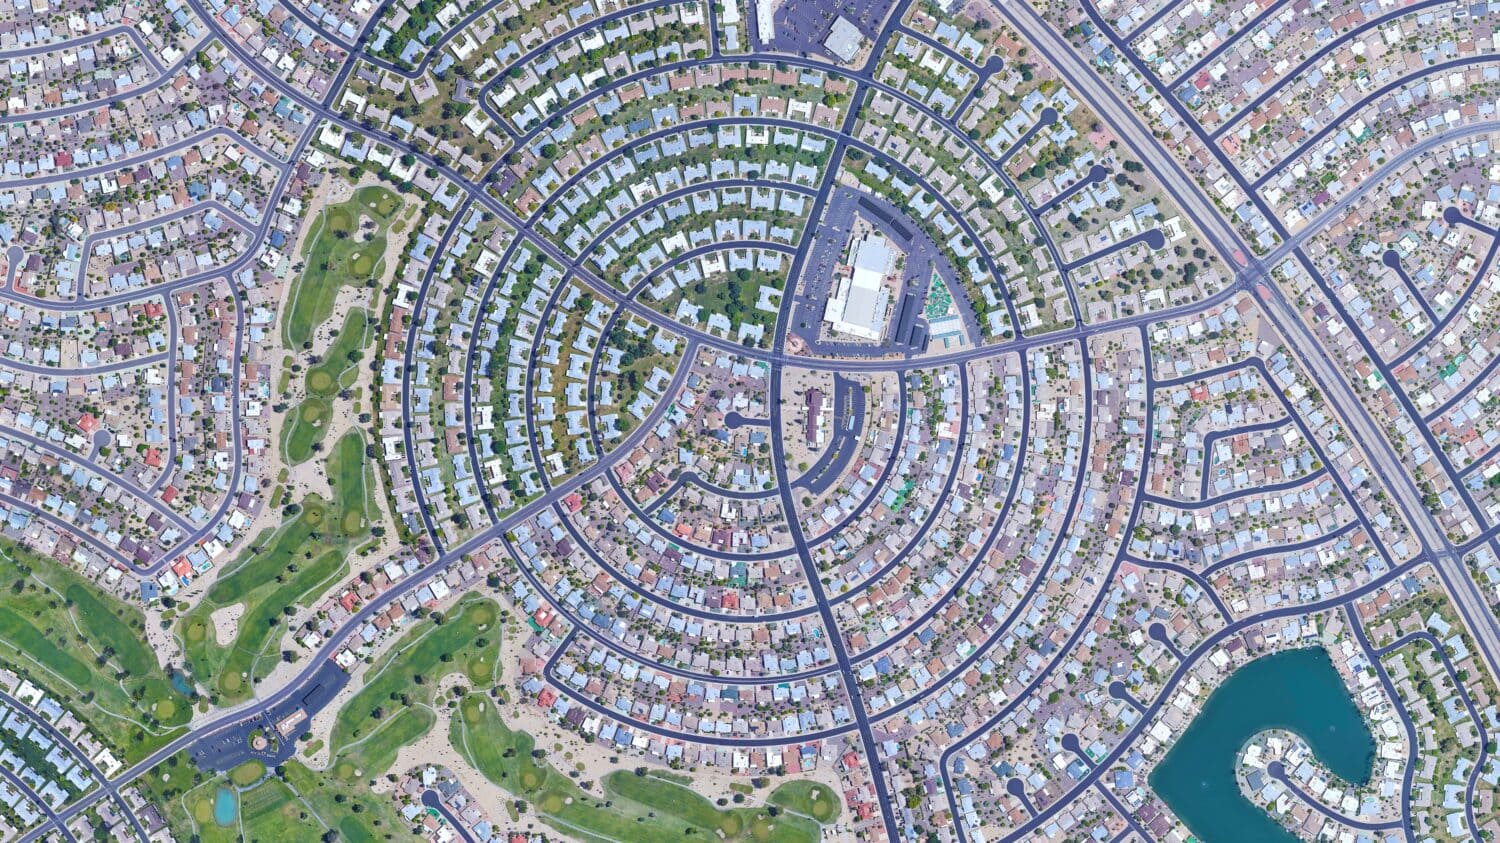 Sun City bird's eye view, a circular shaped suburb of Phoenix, looking down aerial view from above circular city – Arizona, USA